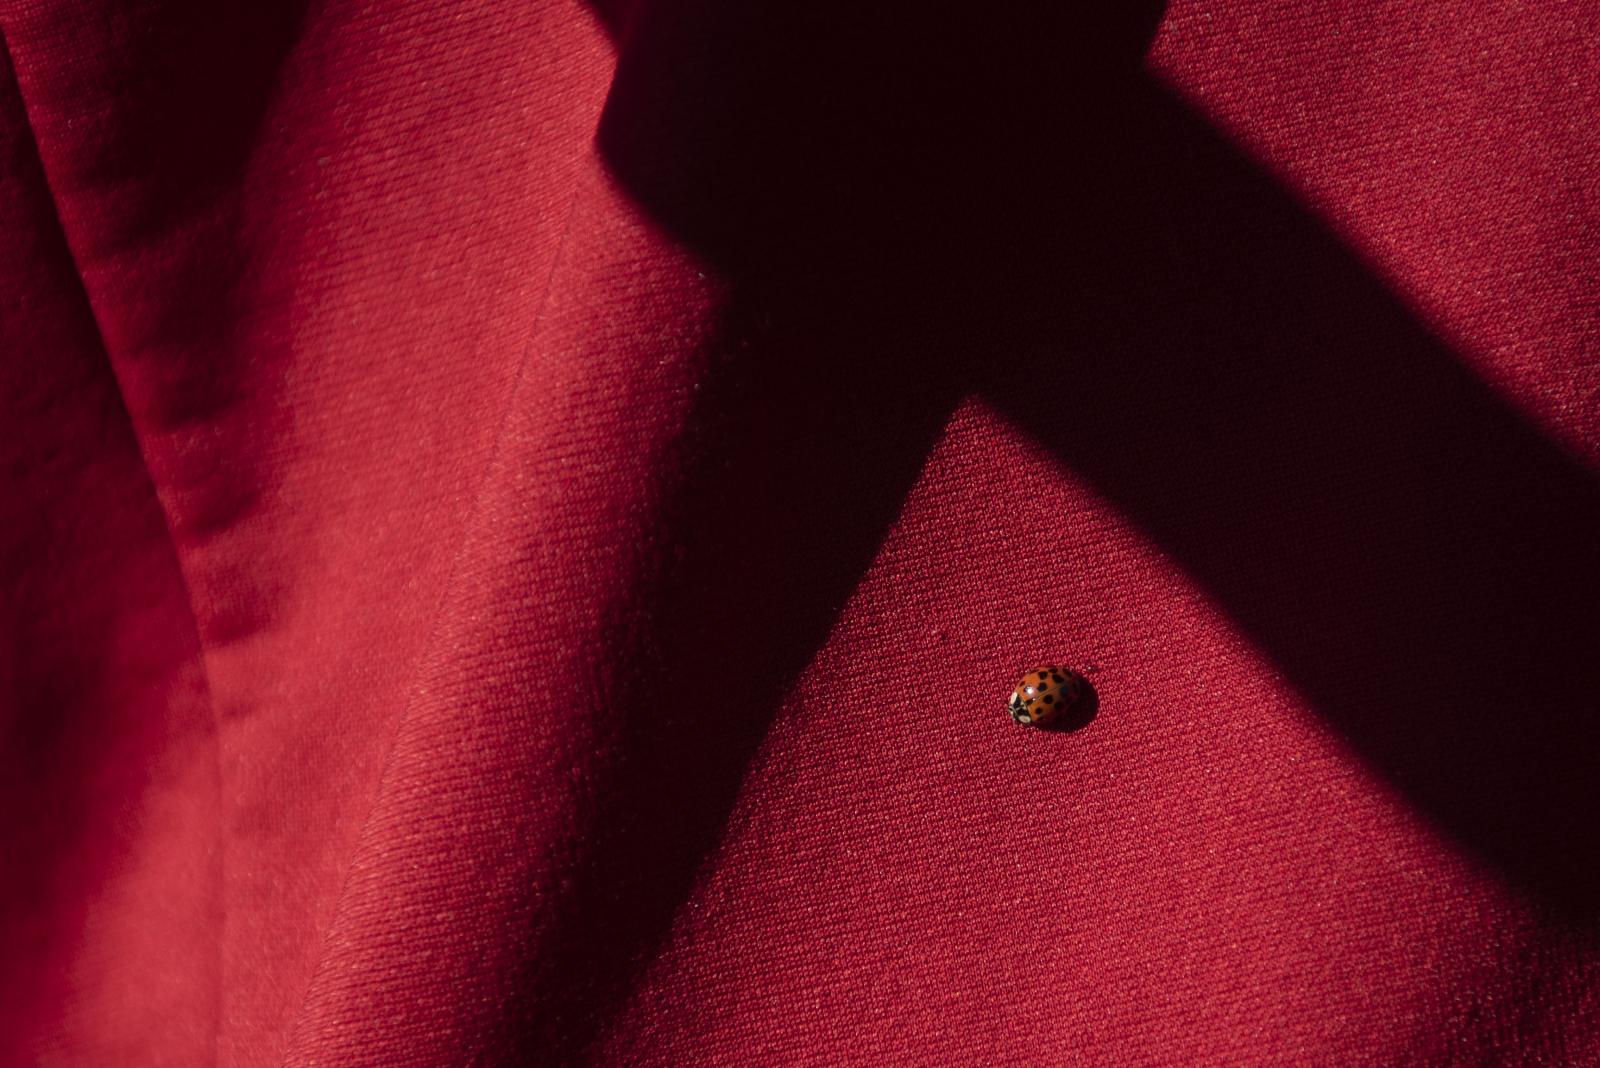 A ladybug lands on Sophie’s shirt Nov. 27, 2021, in Rich Hill, Mo. 